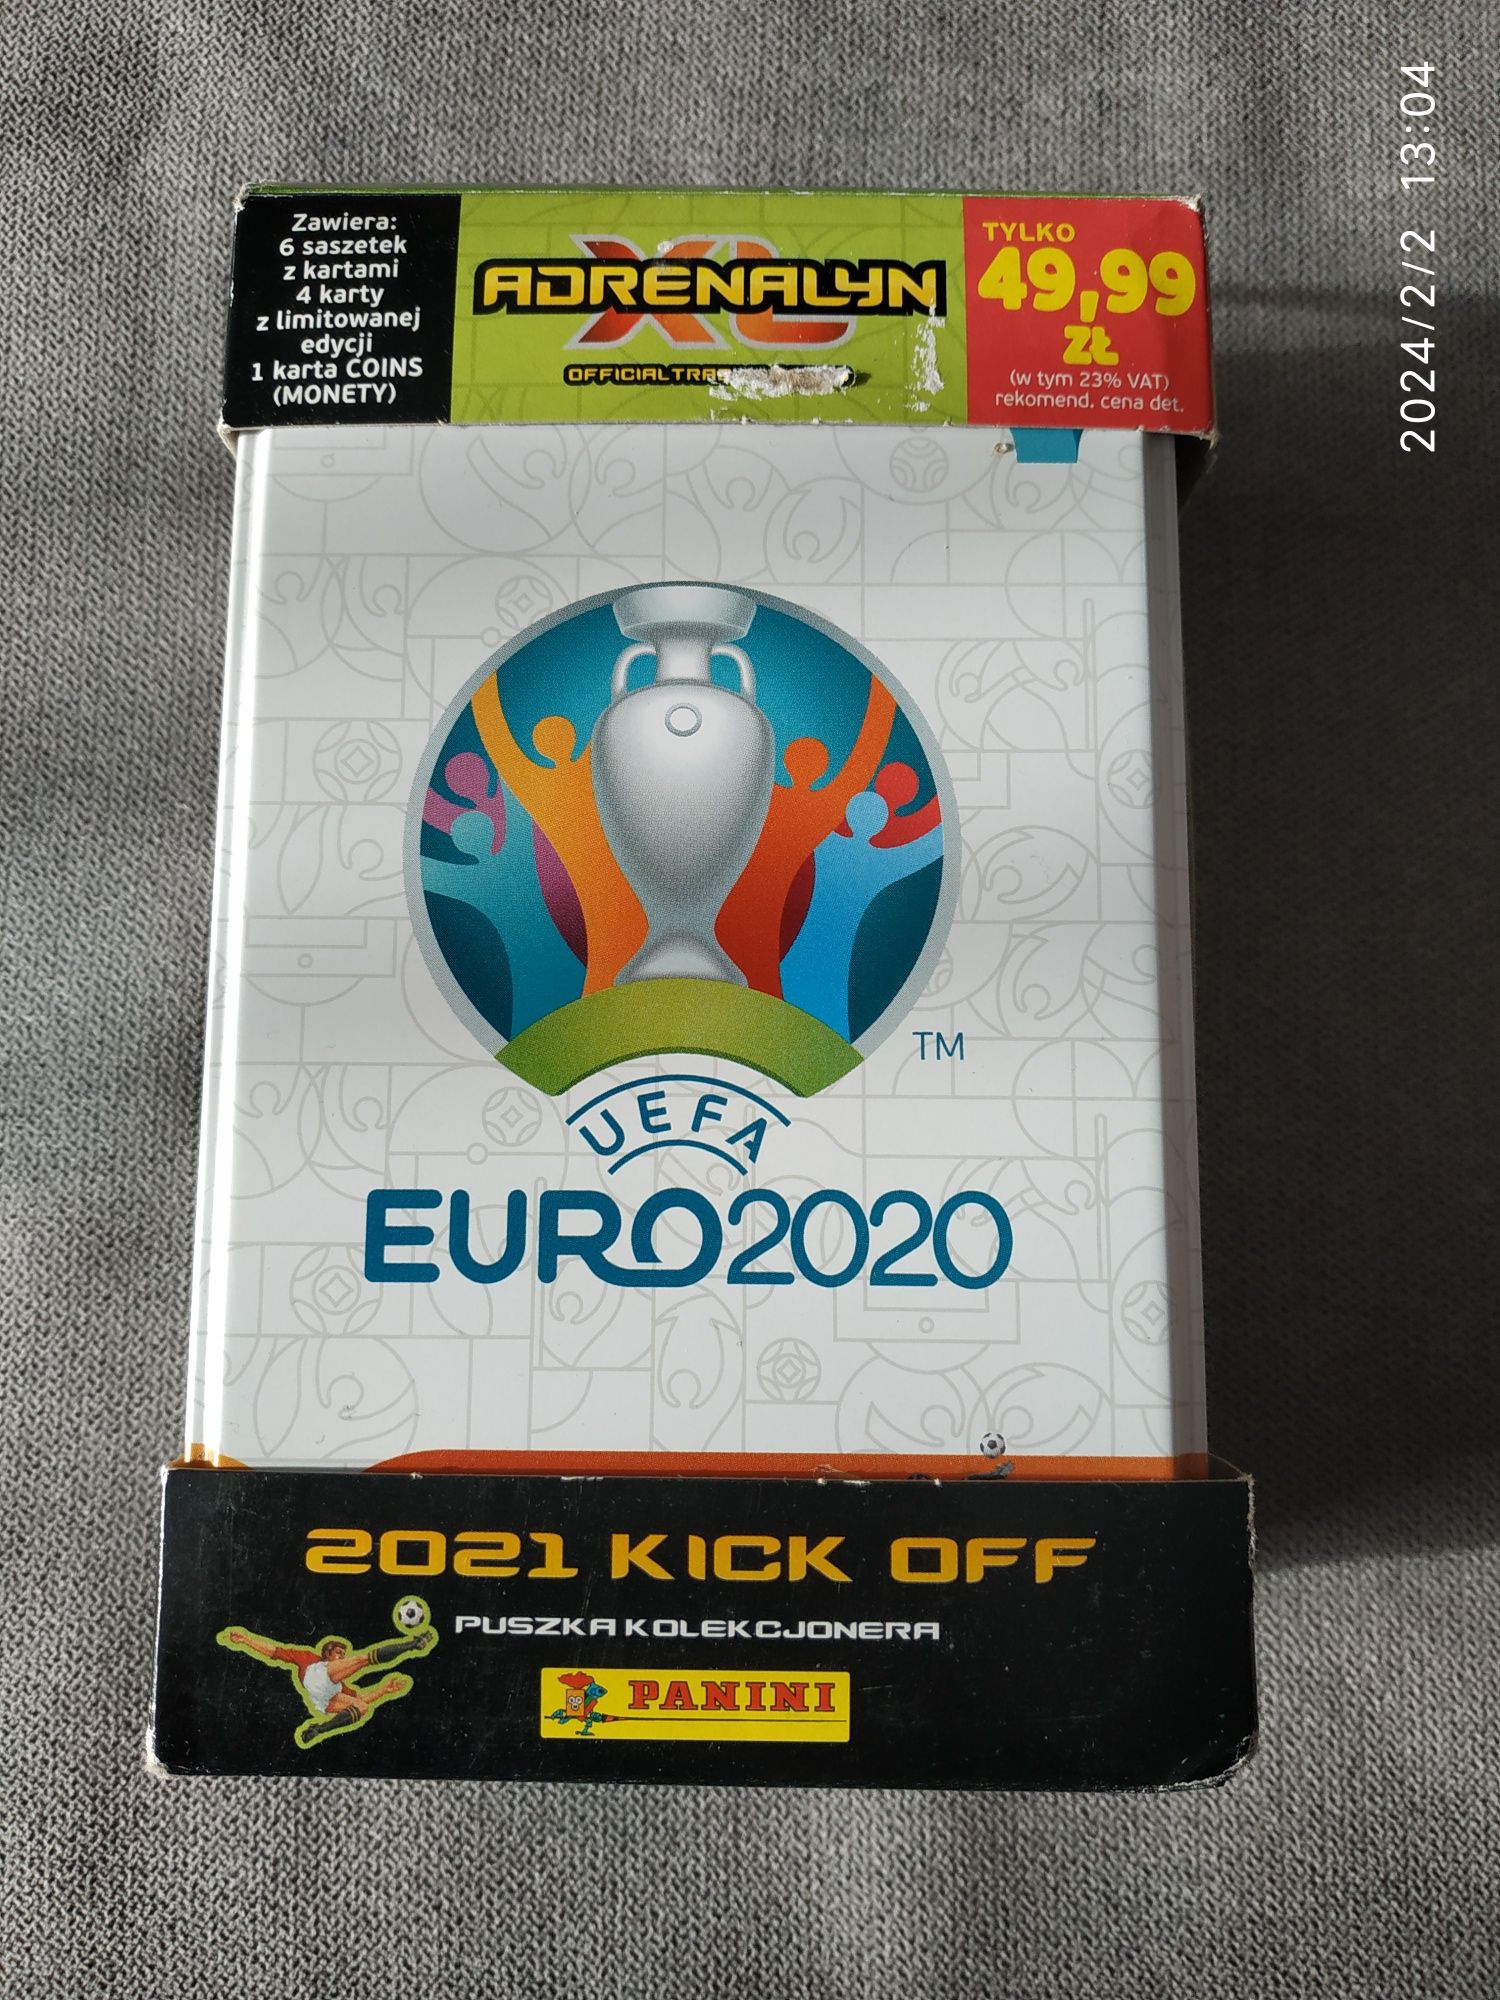 Panini UEFA EURO 2020 - Kick Off 2021 - Puszka + 80 kart (Kane, Giroud